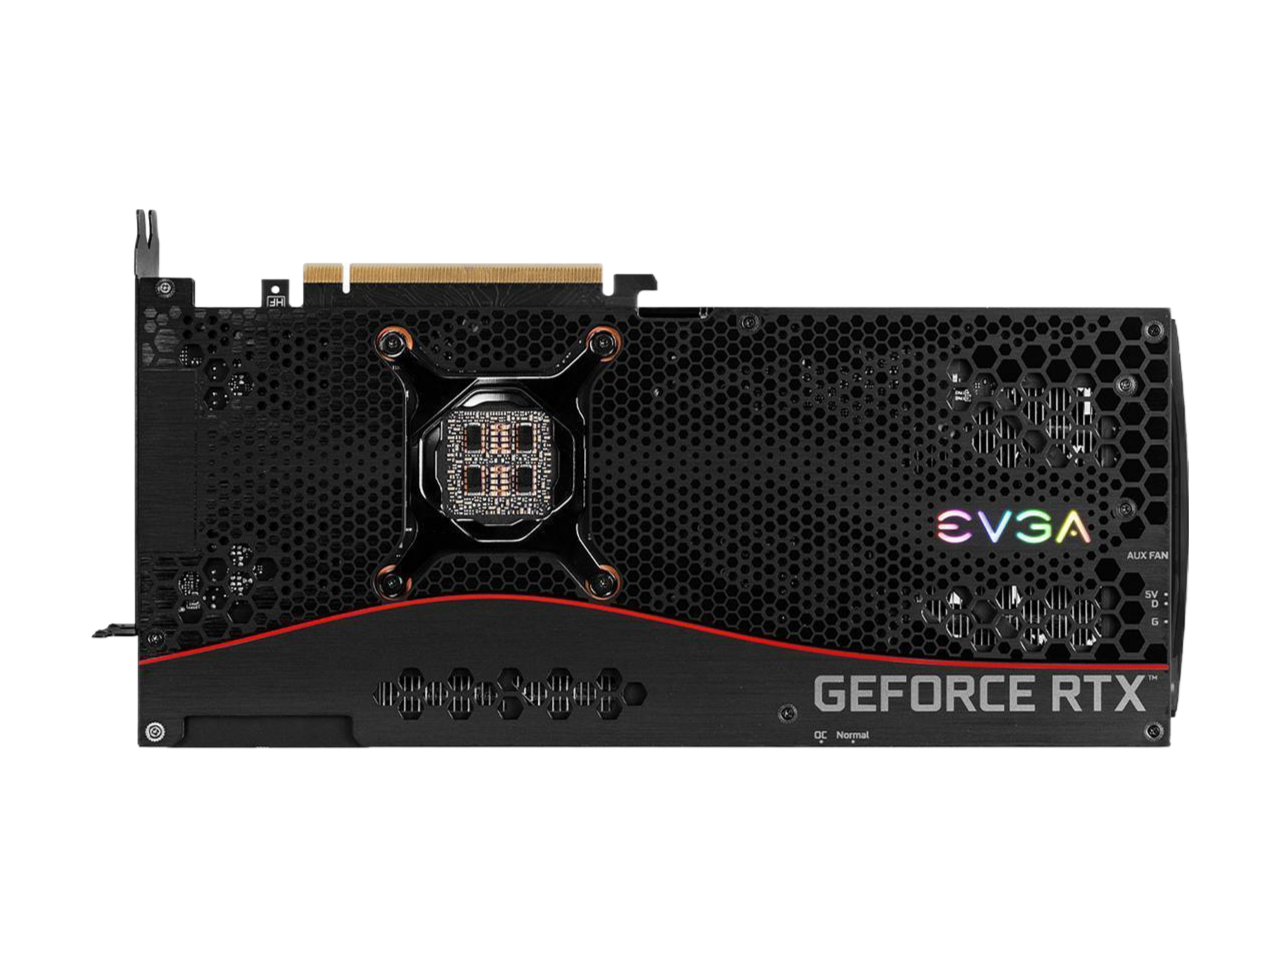 EVGA GeForce RTX 3080 Ti FTW3 Ultra Gaming, 12G-P5-3967-KR, 12GB GDDR6X,  iCX3 Technology, ARGB LED, Metal Backplate